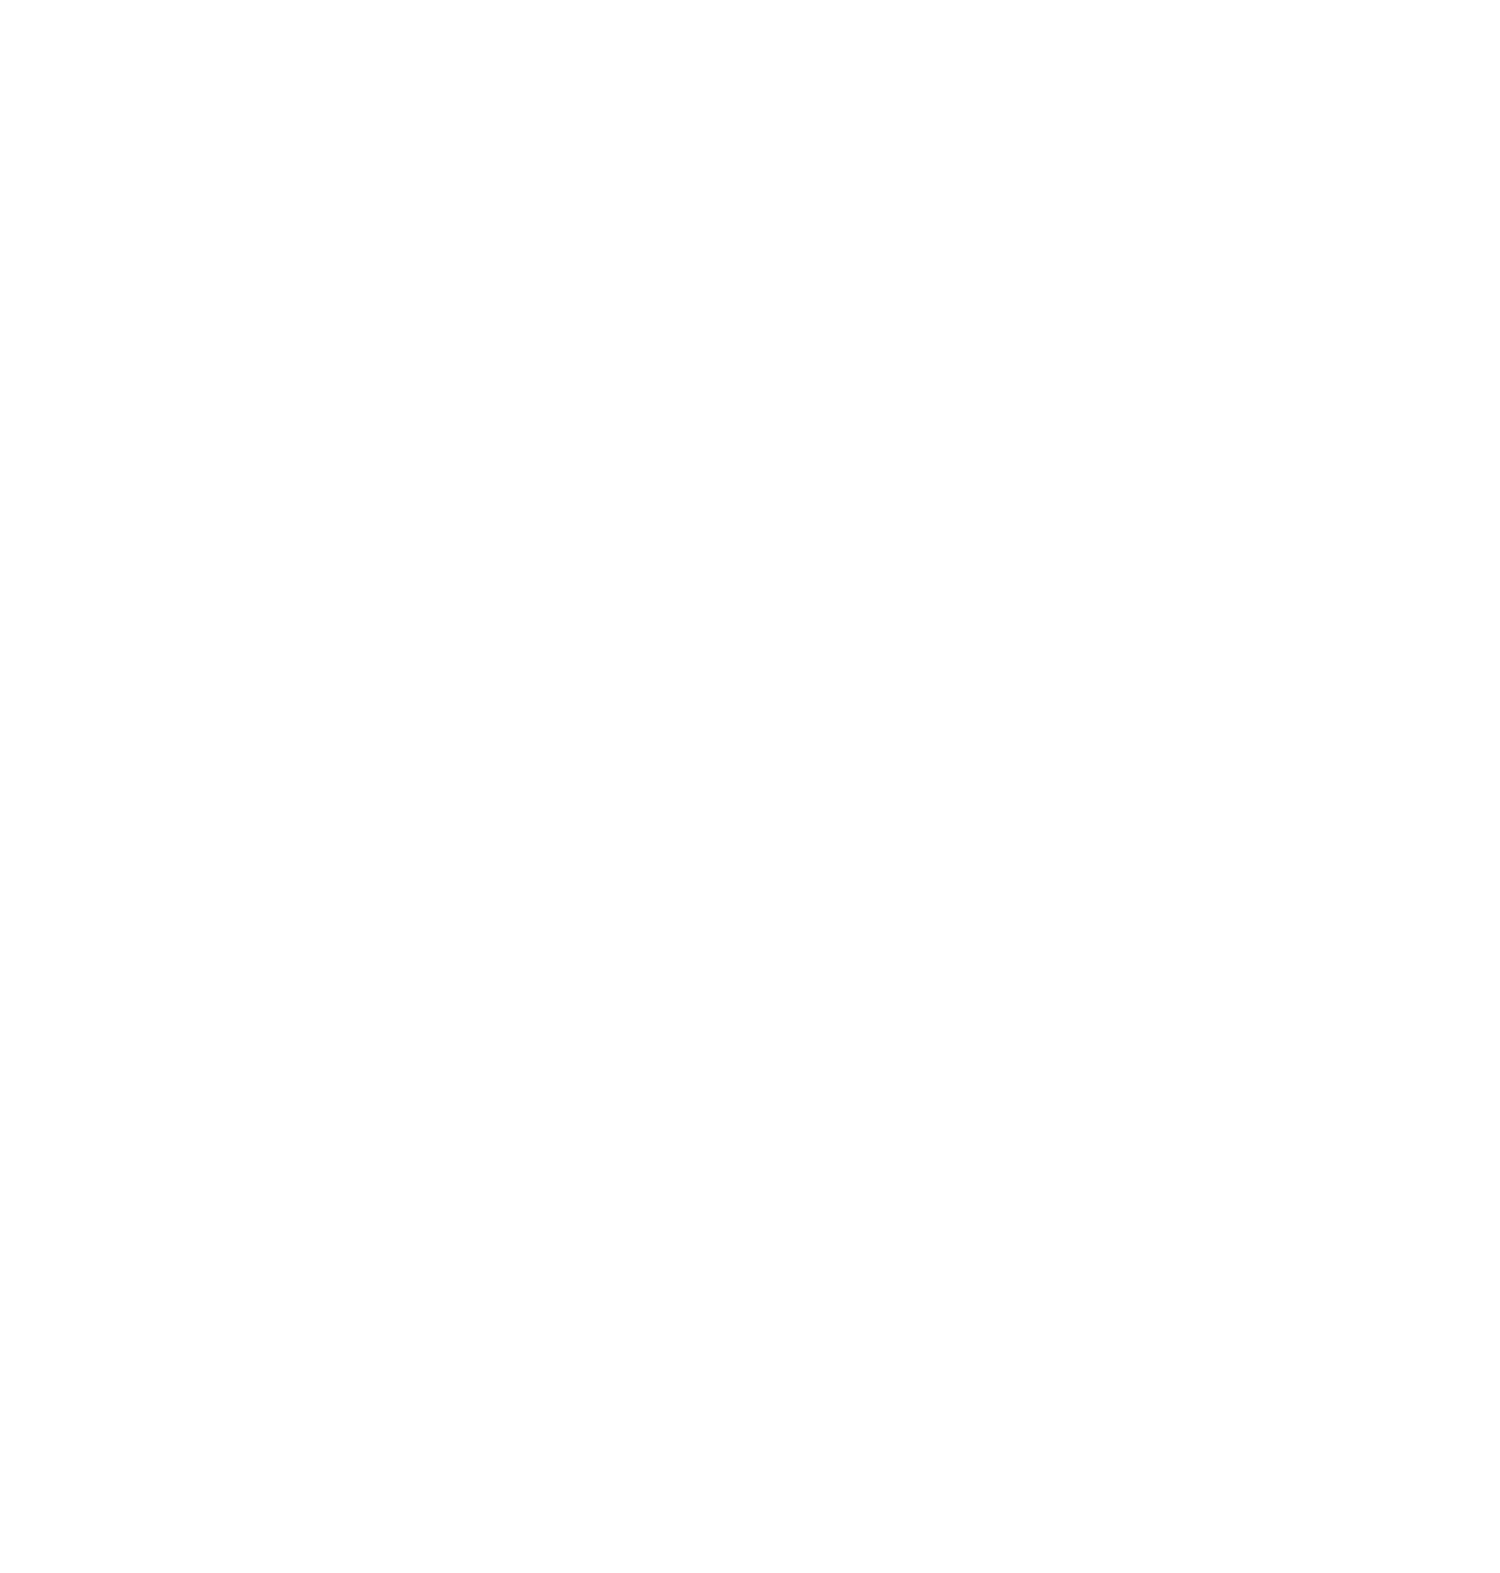 Jason Williams